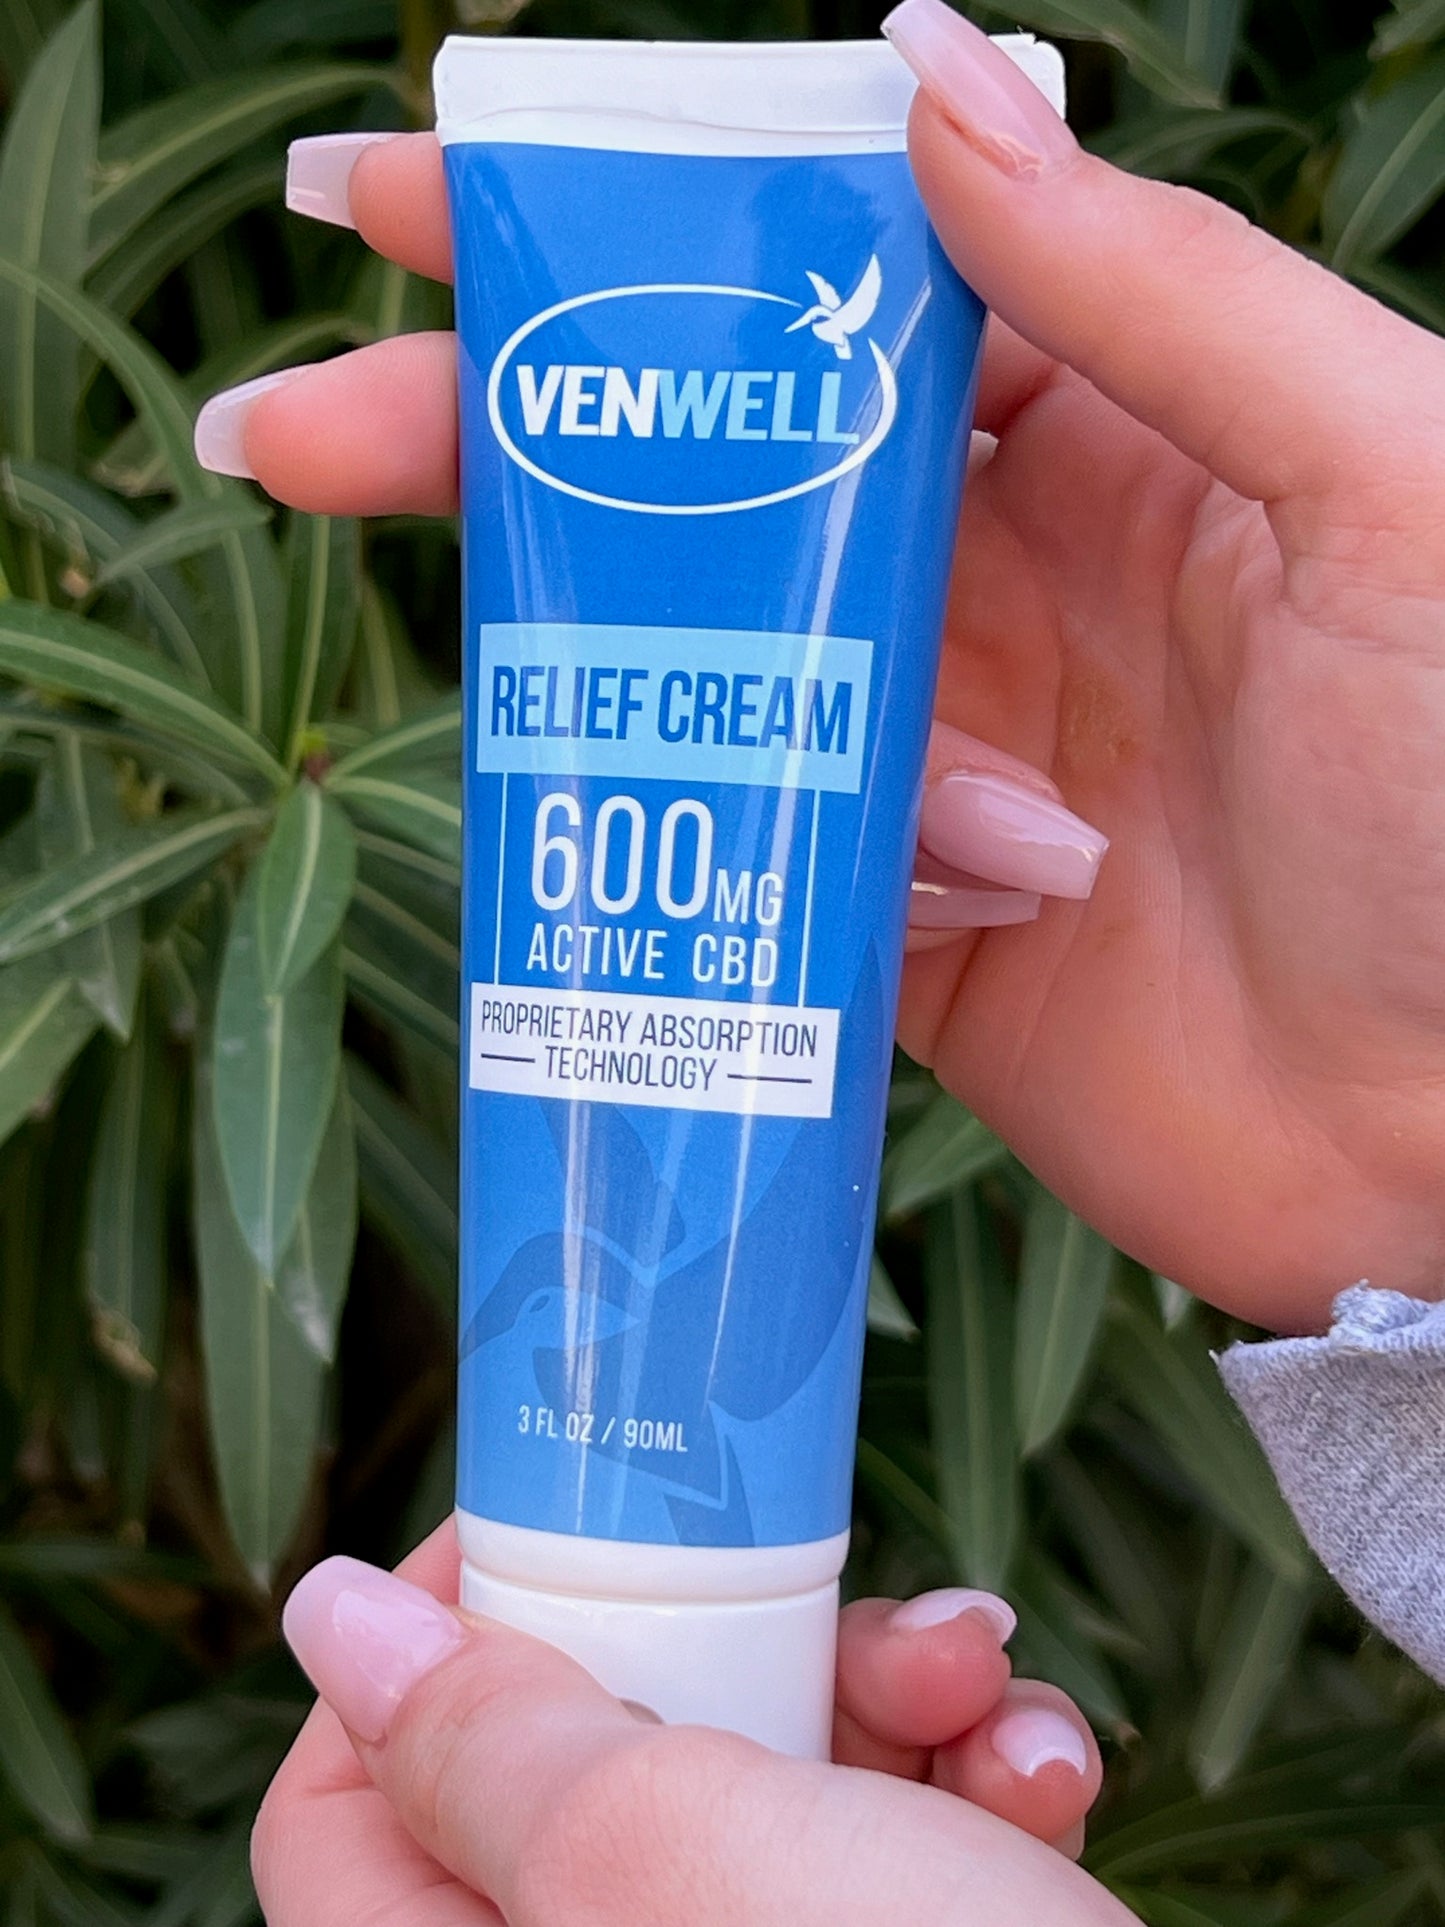 VenWell Relief Cream